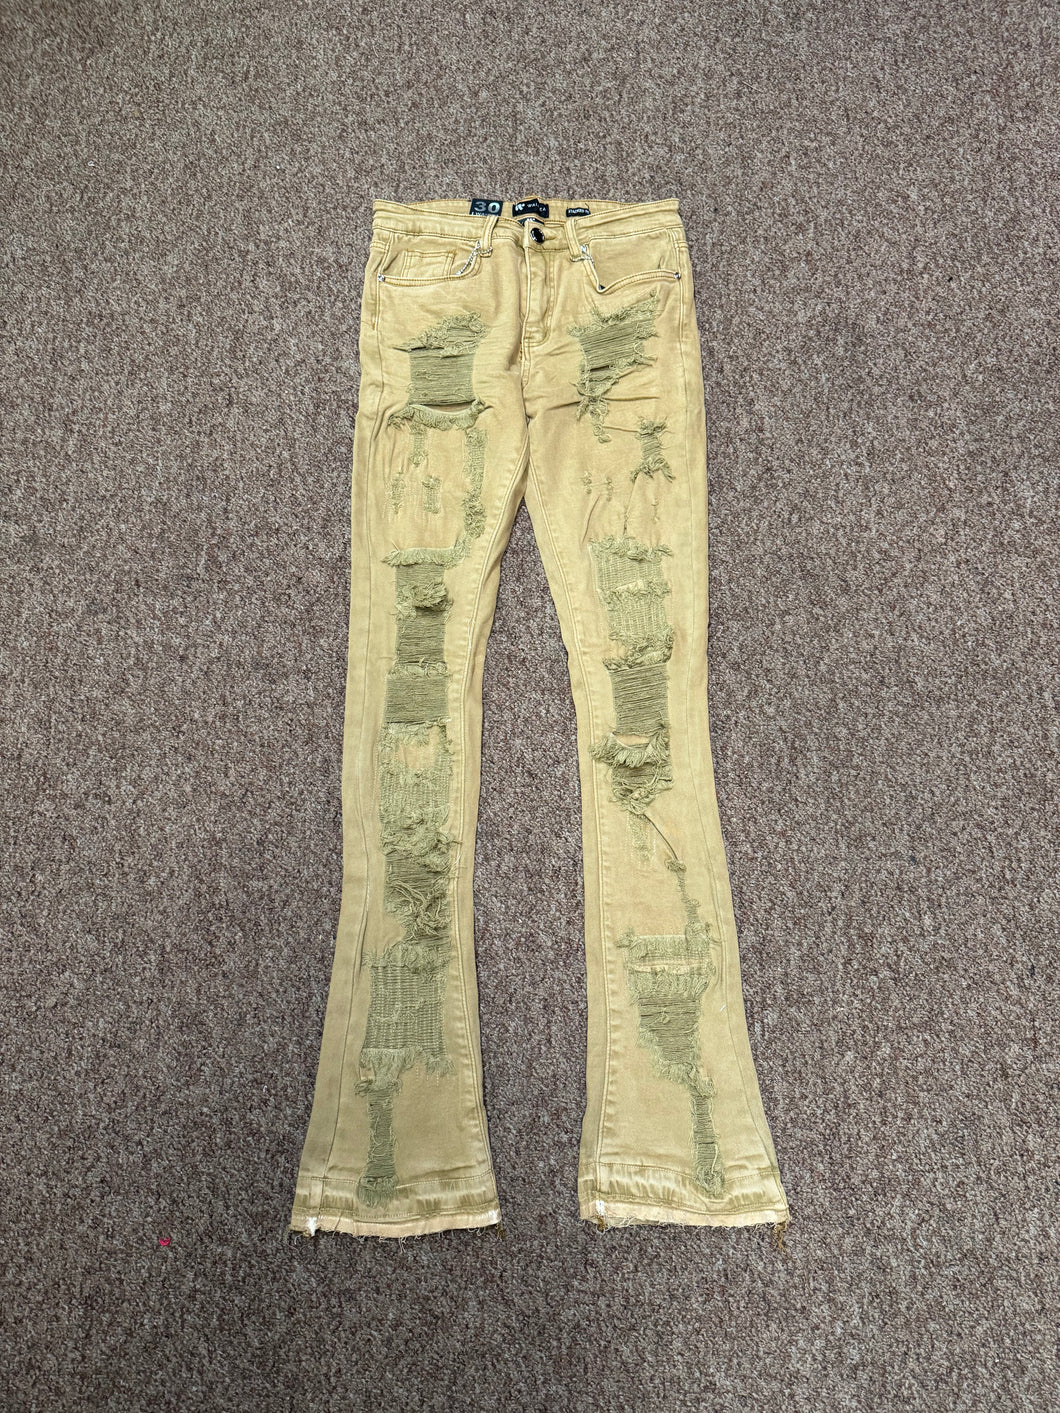 WM| Khaki Rip Denim jeans(Stacked)